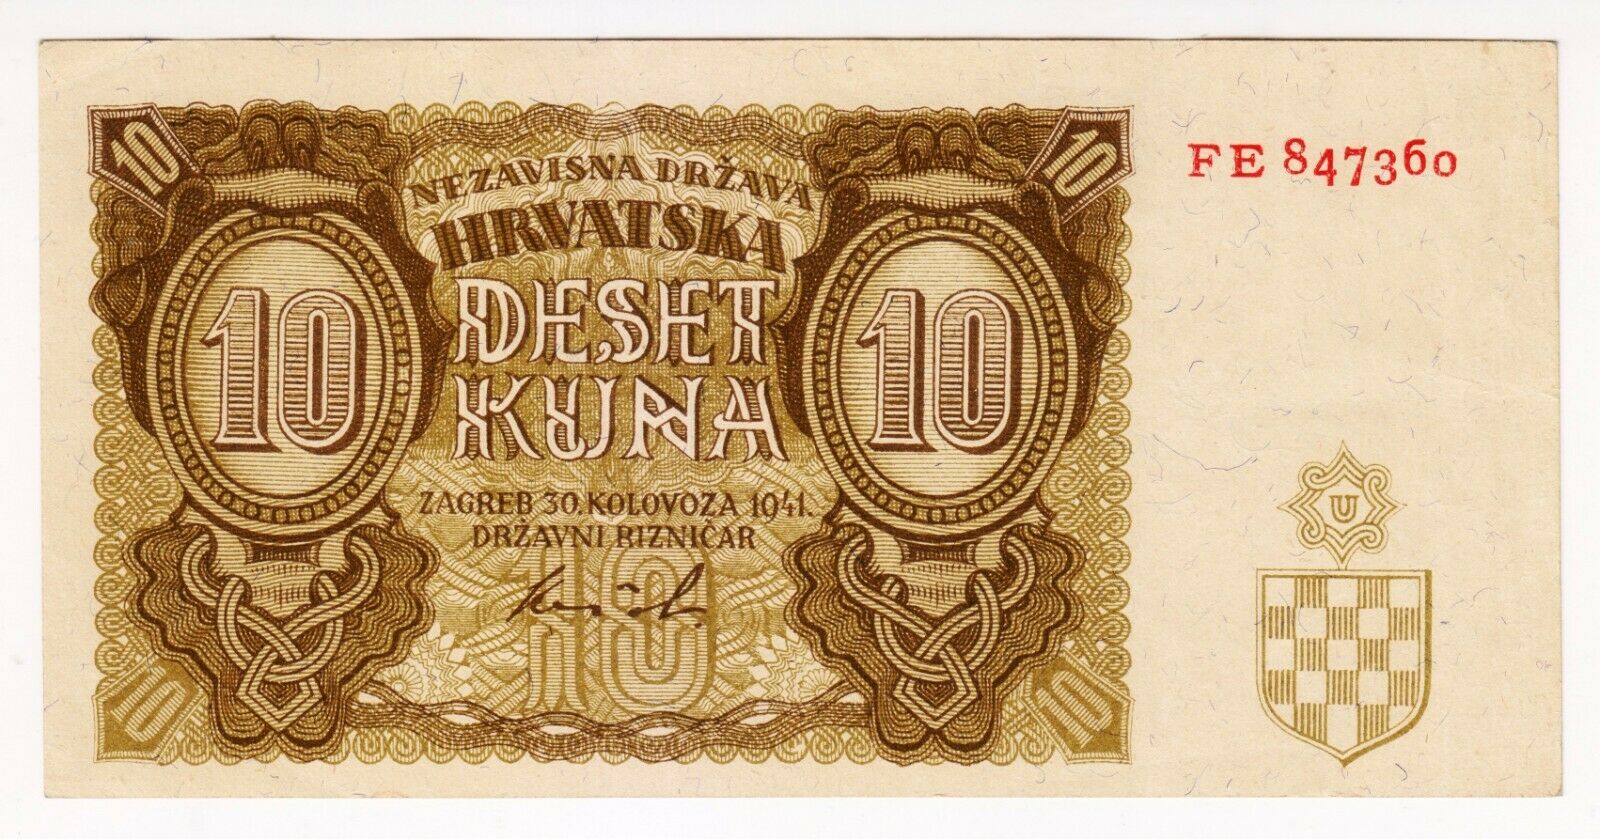 1941 Croatia 10 Kuna Ndh Xf Aunc Fe847360 Paper Banknote Money Currency